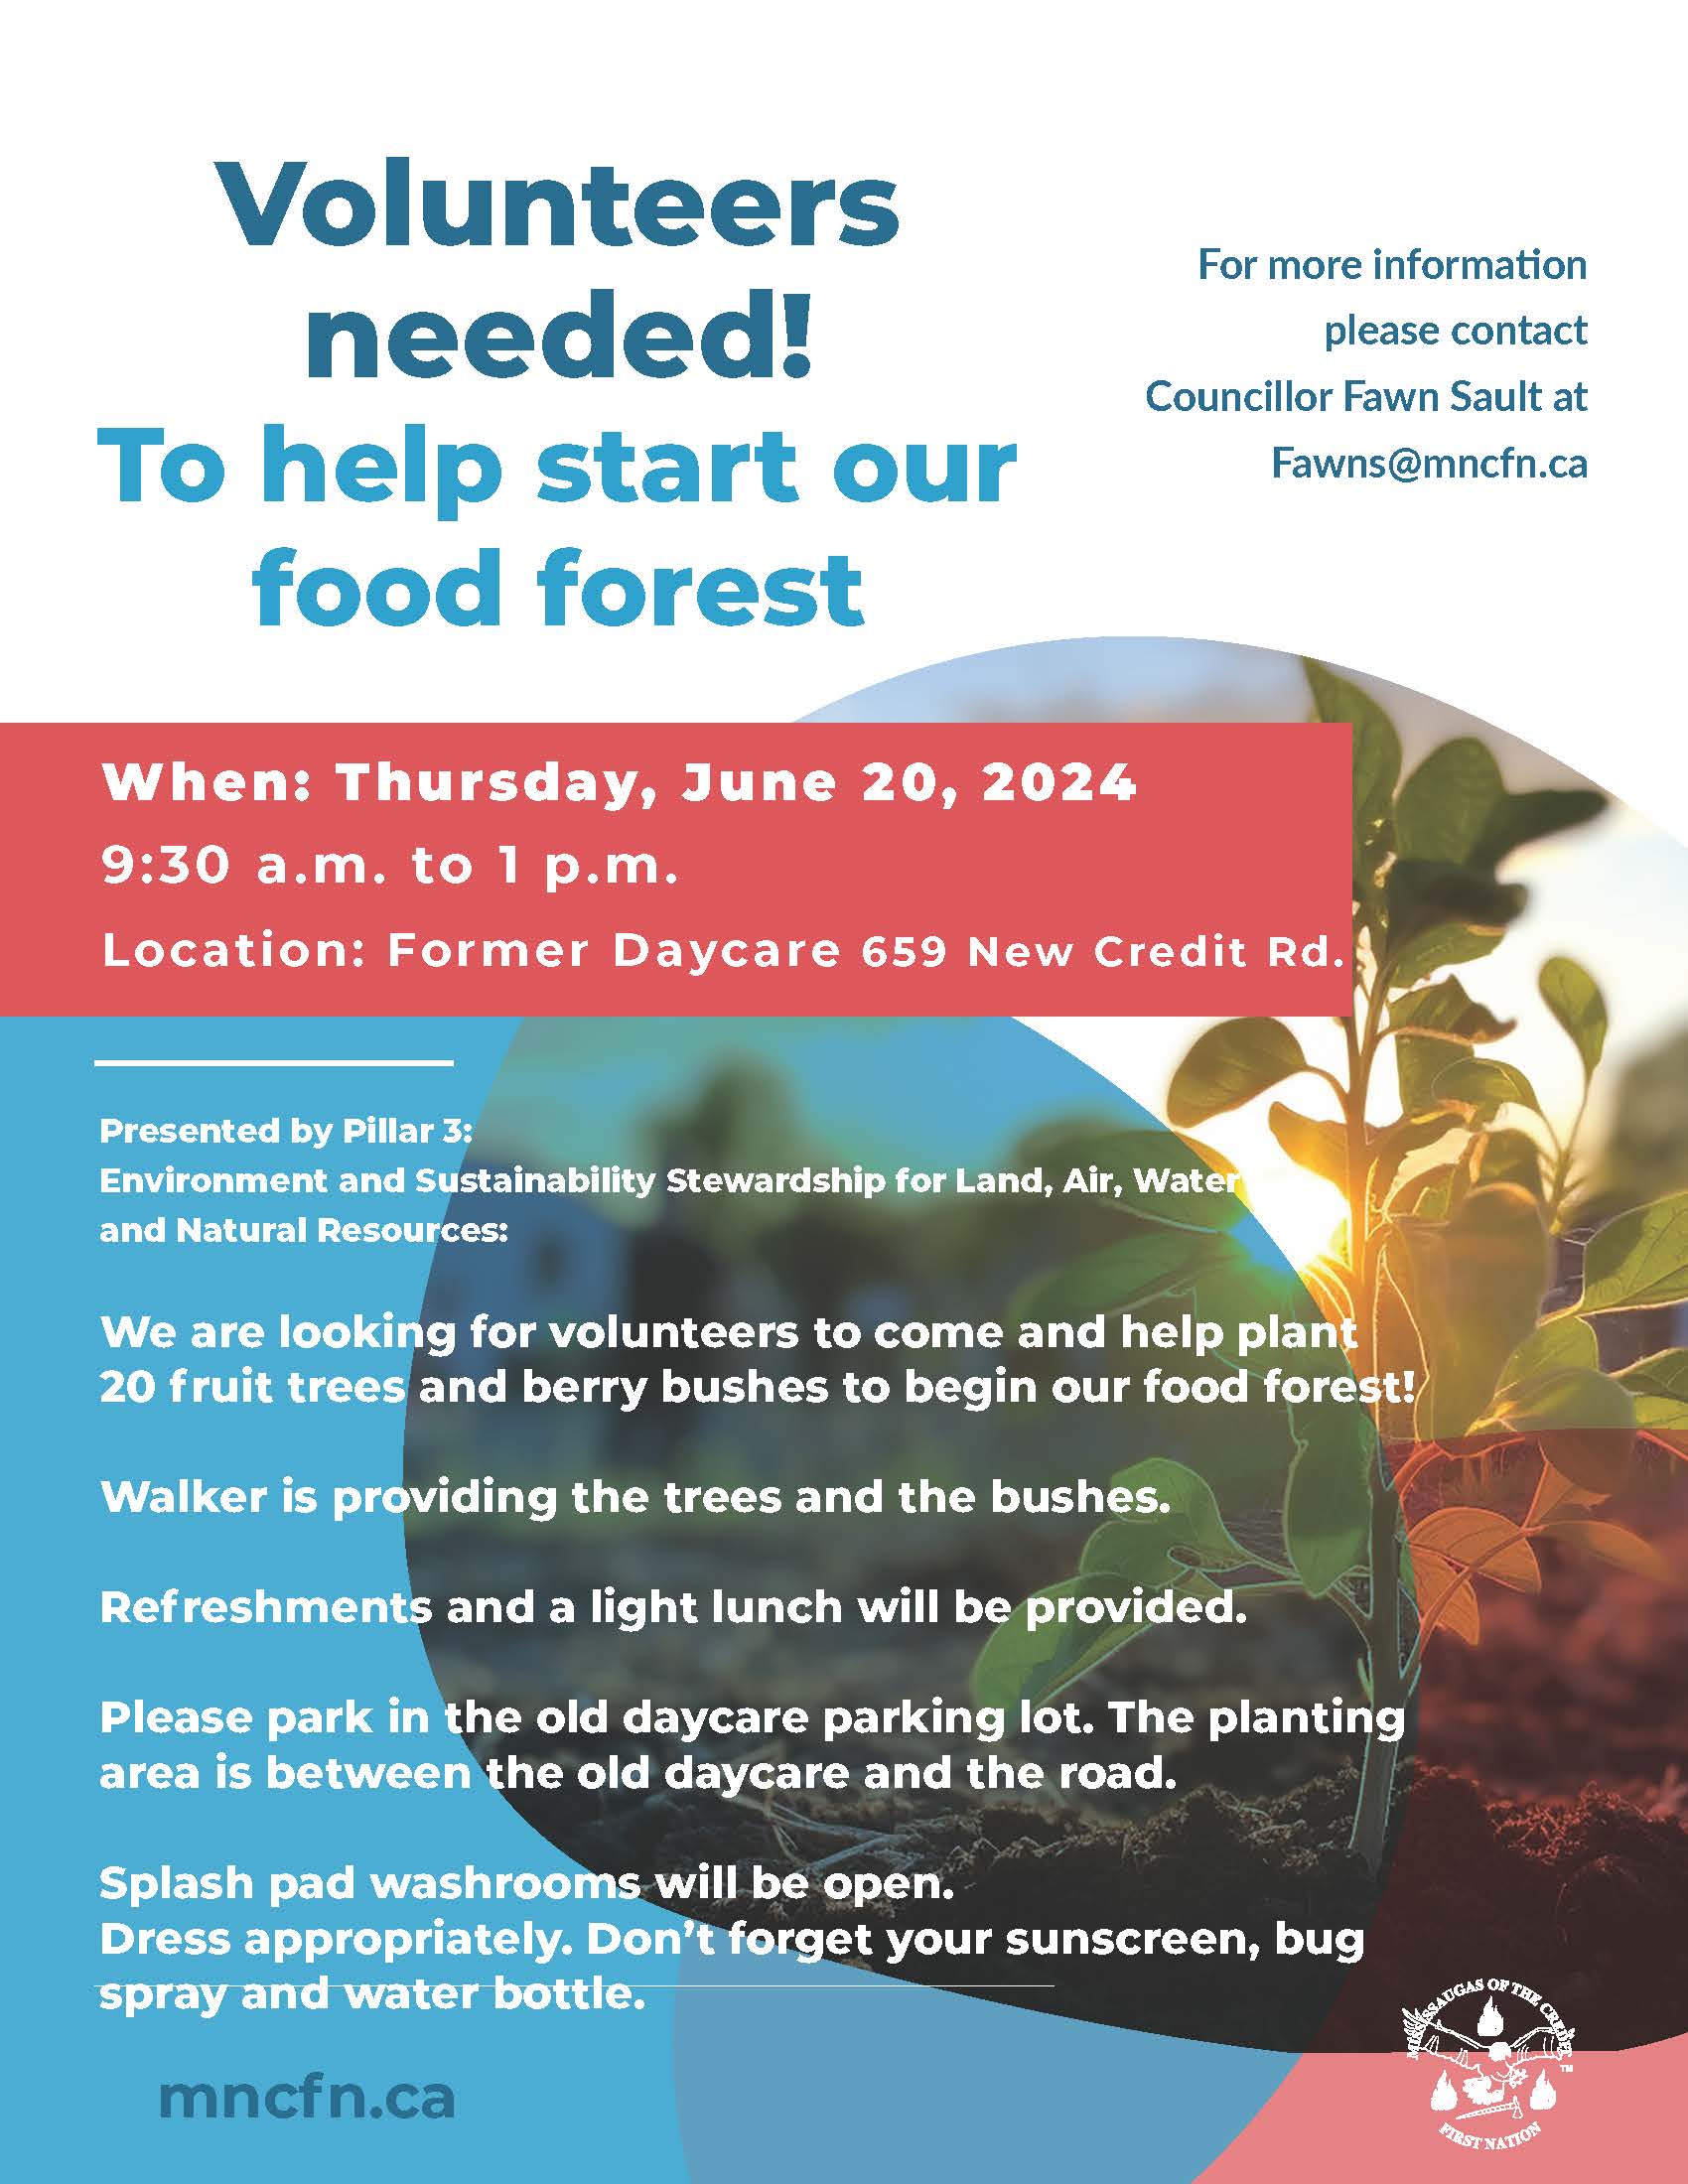 Volunteers needed to help plant MCFN’s Food Forest